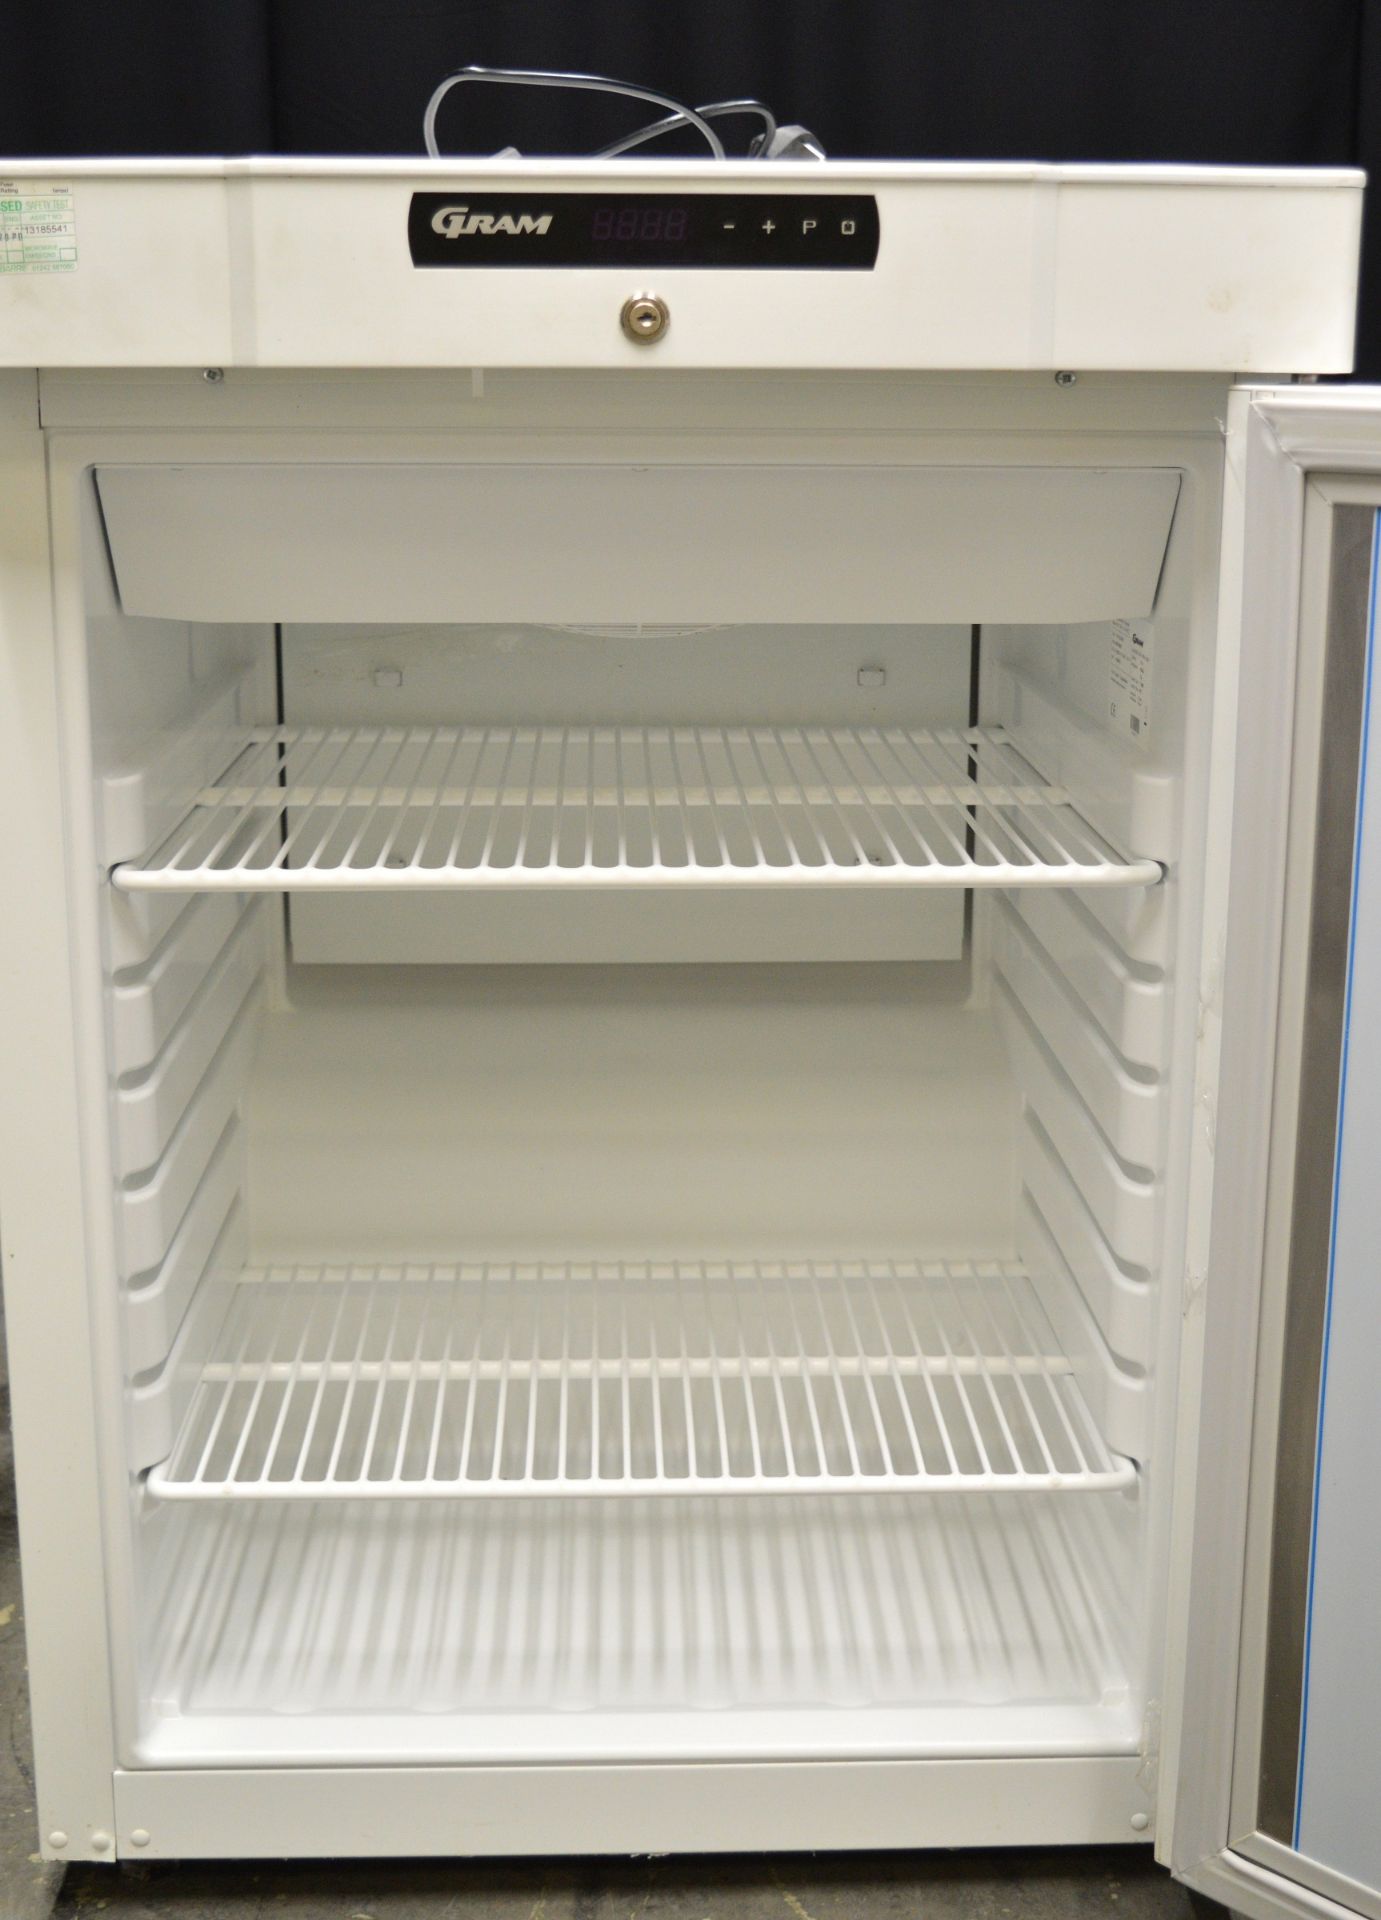 Gram K 210 LG 3W Undercounter Refrigerator - Image 4 of 7